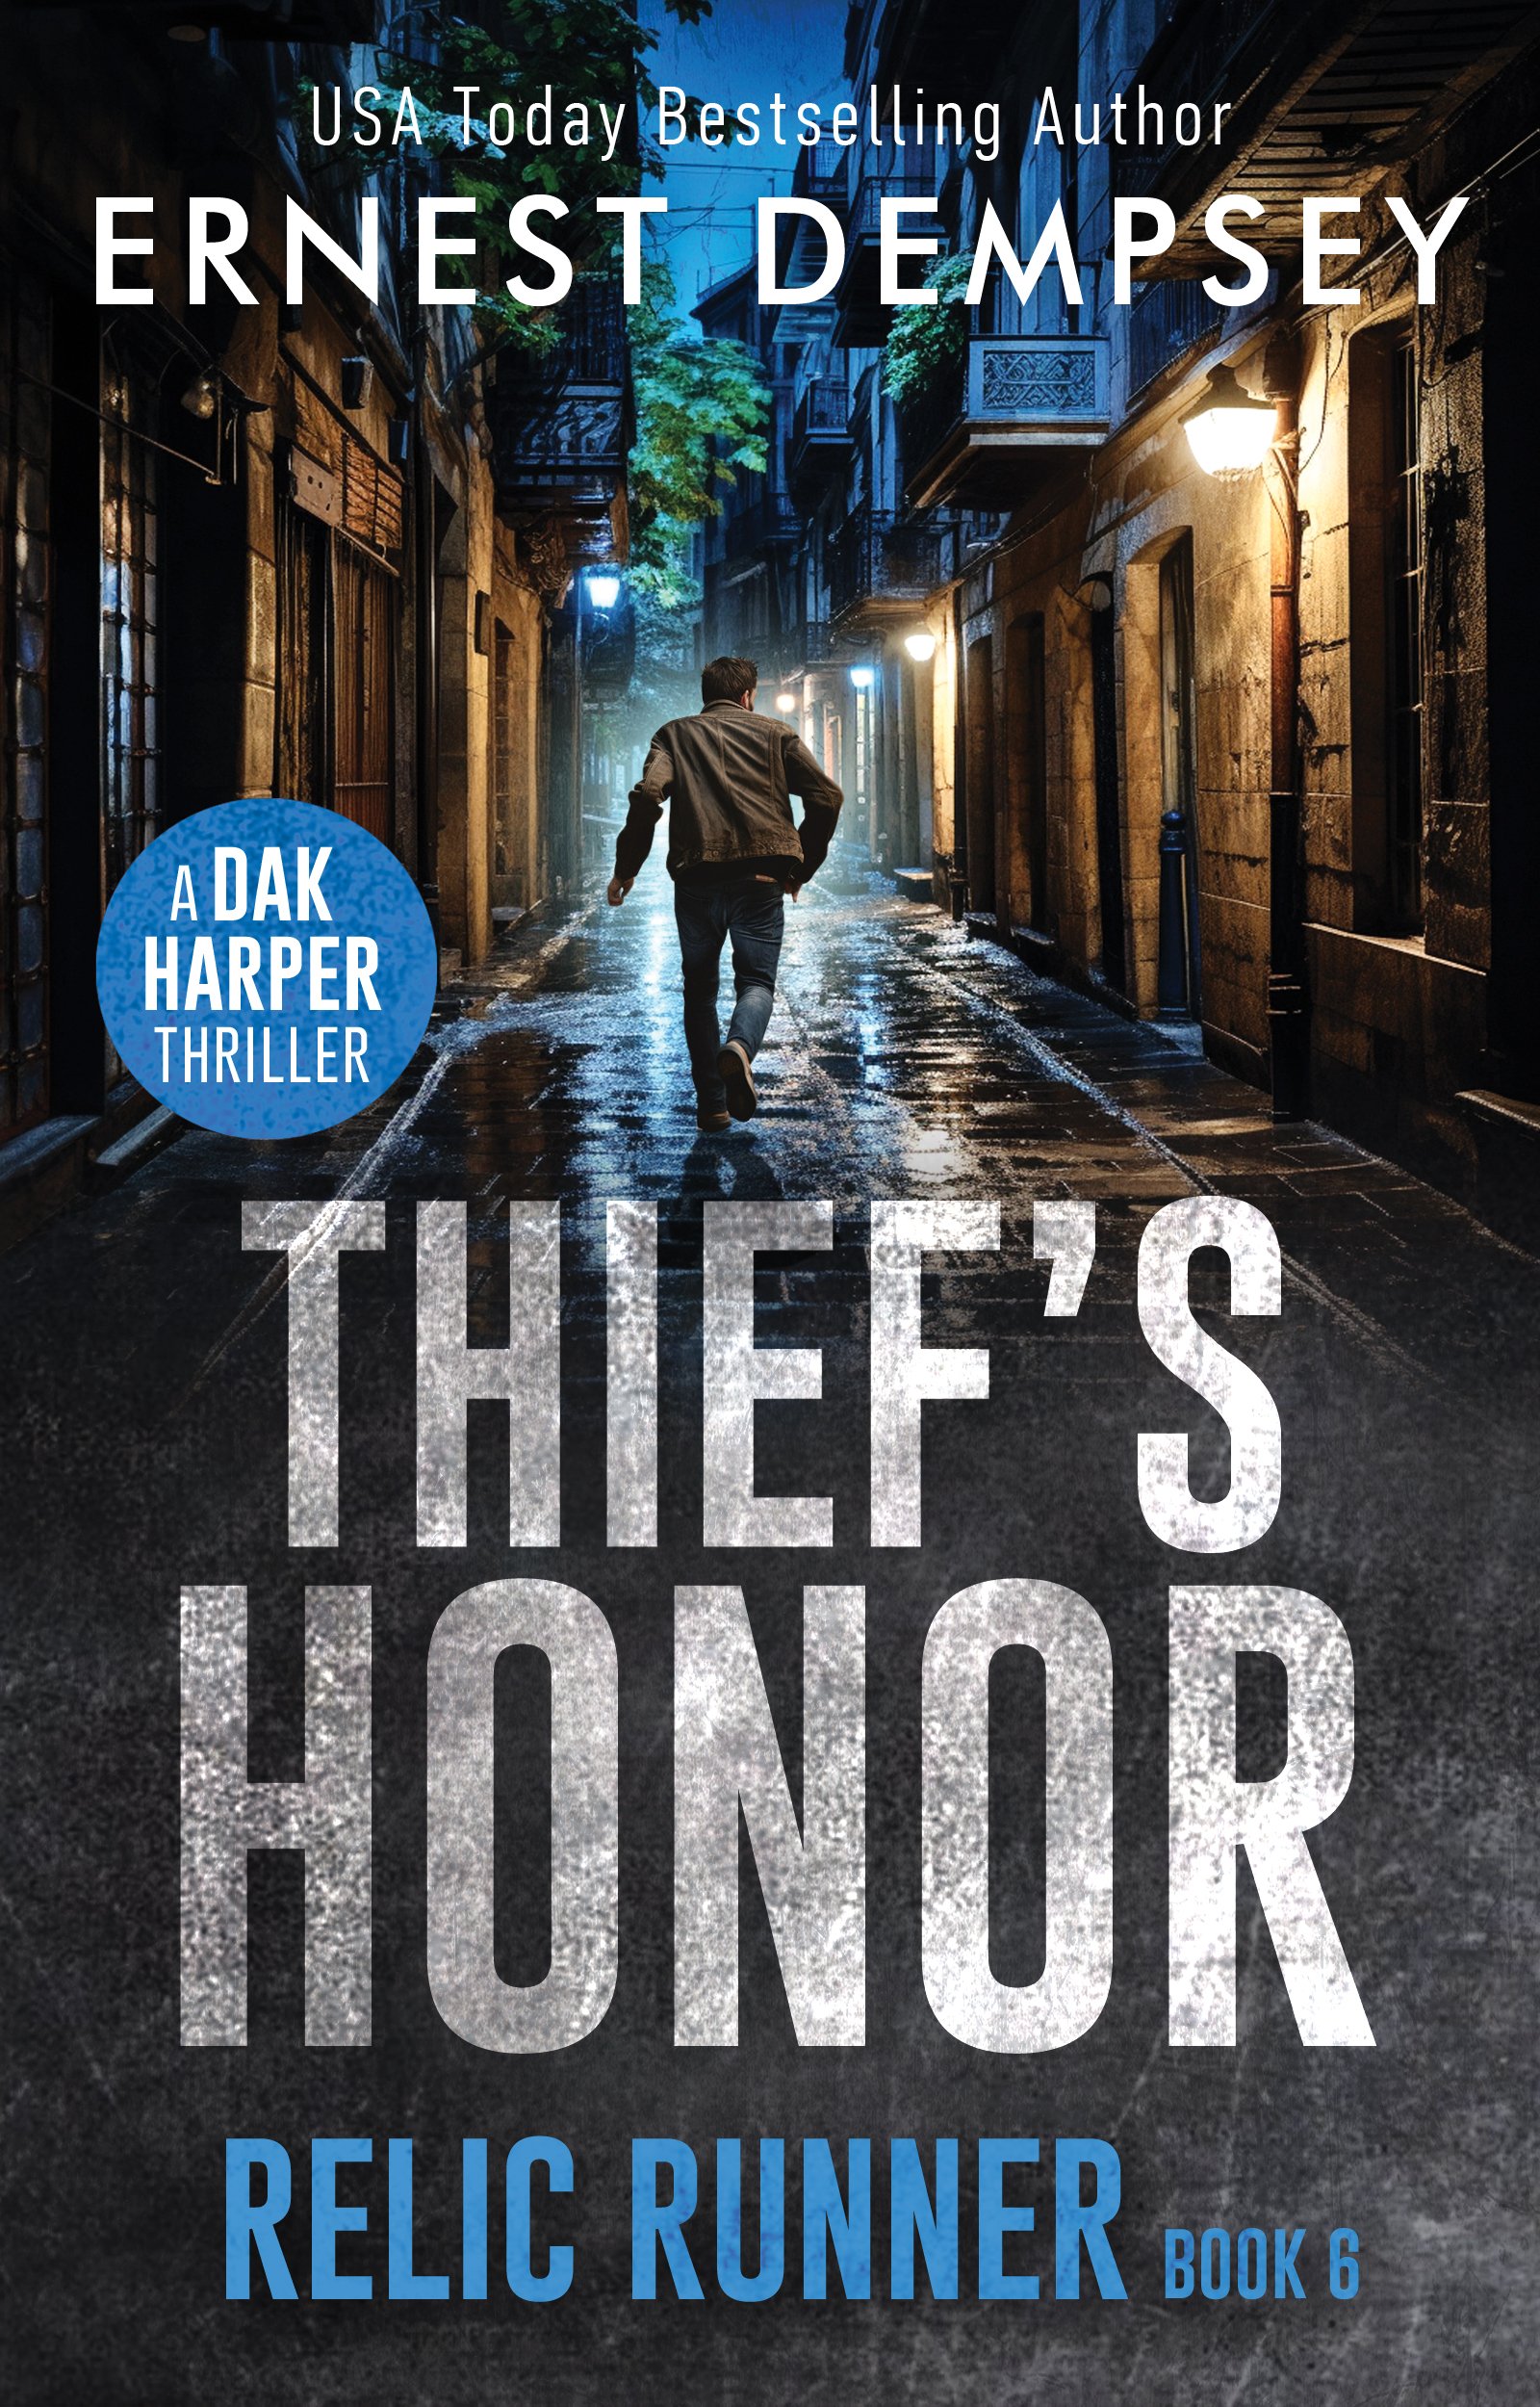 Thief's honor EBOOK cover.jpg